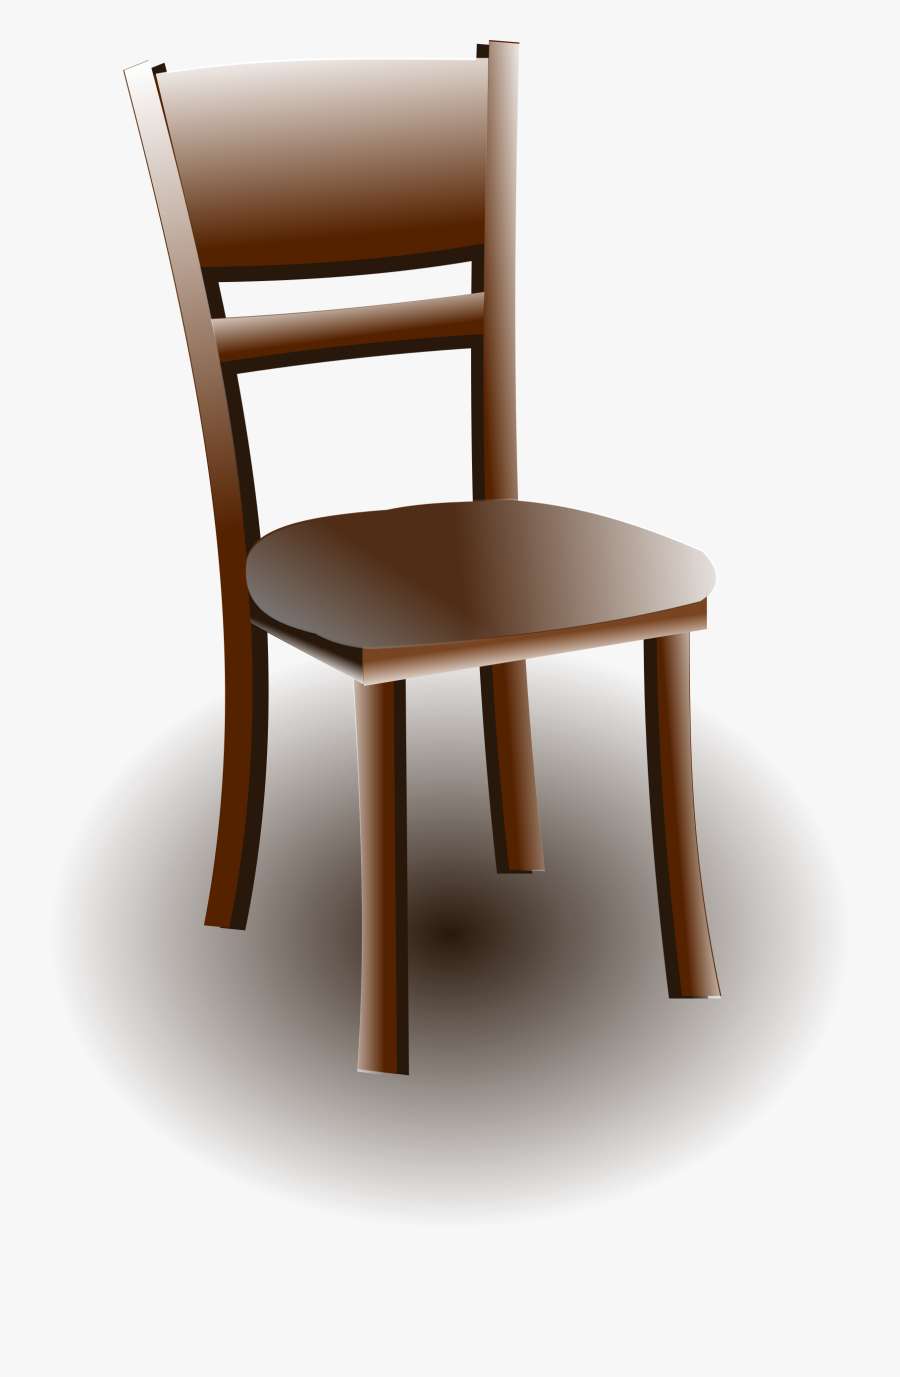 Chair Clipart Wood Chair - Wooden Chair Clipart, Transparent Clipart